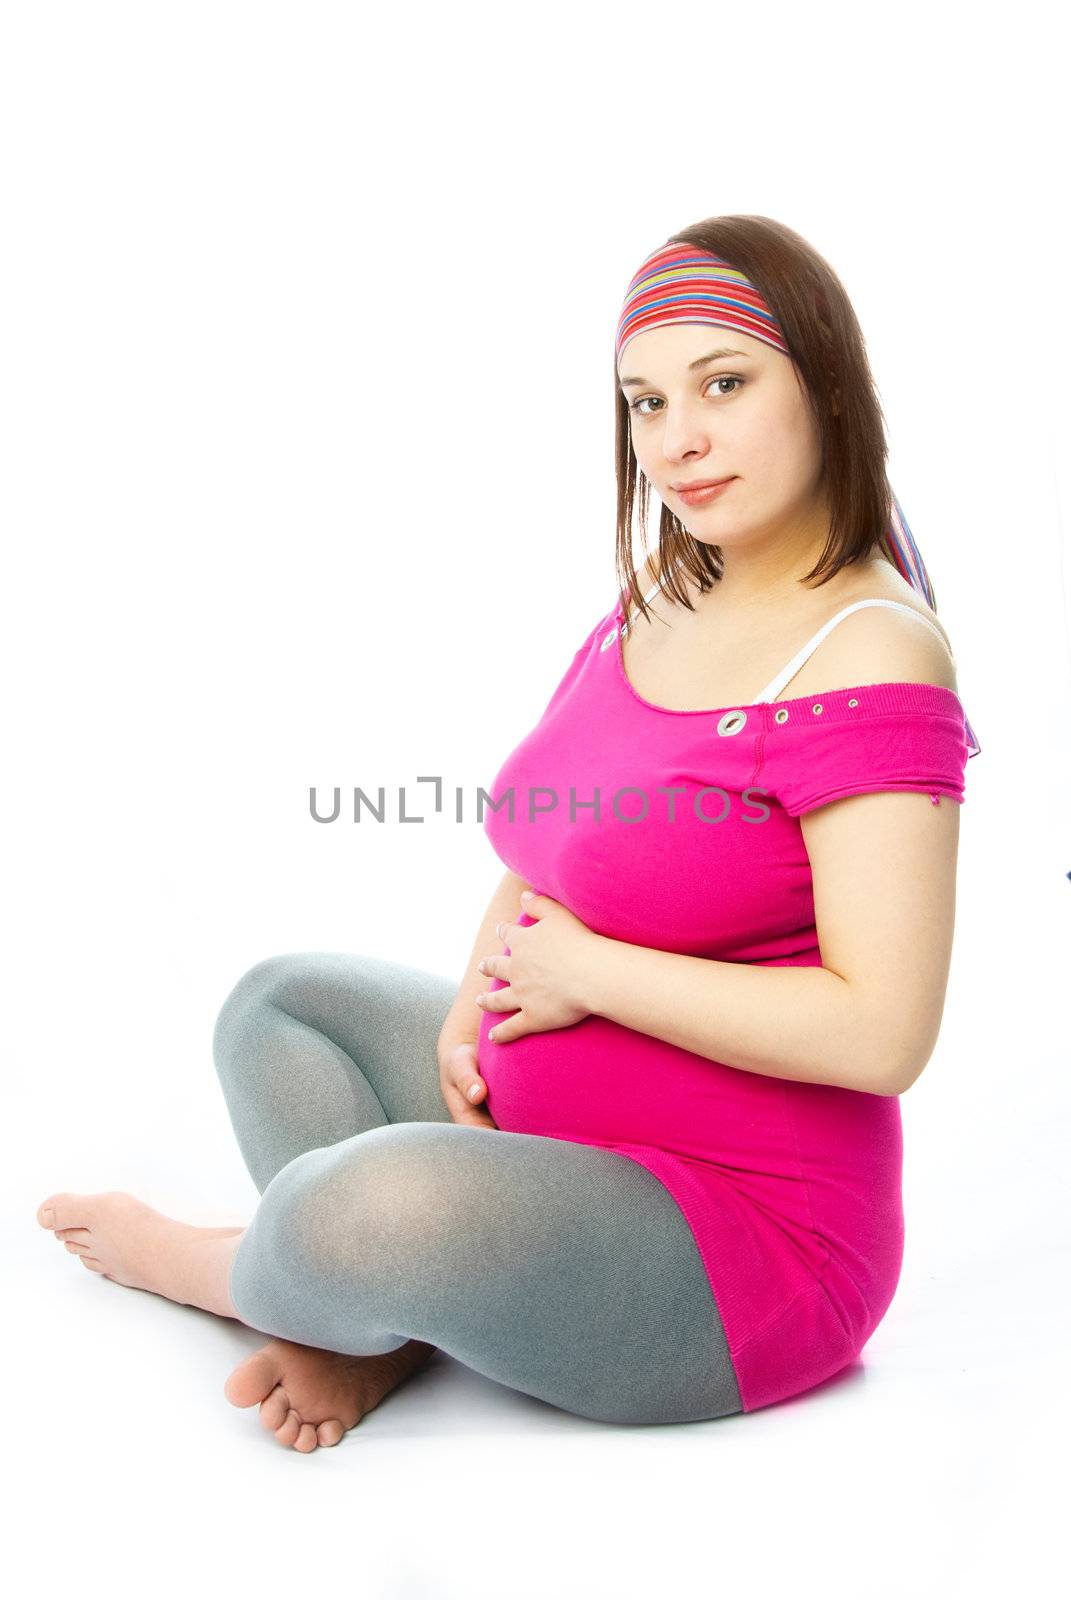 beautiful pregnant woman by lanak